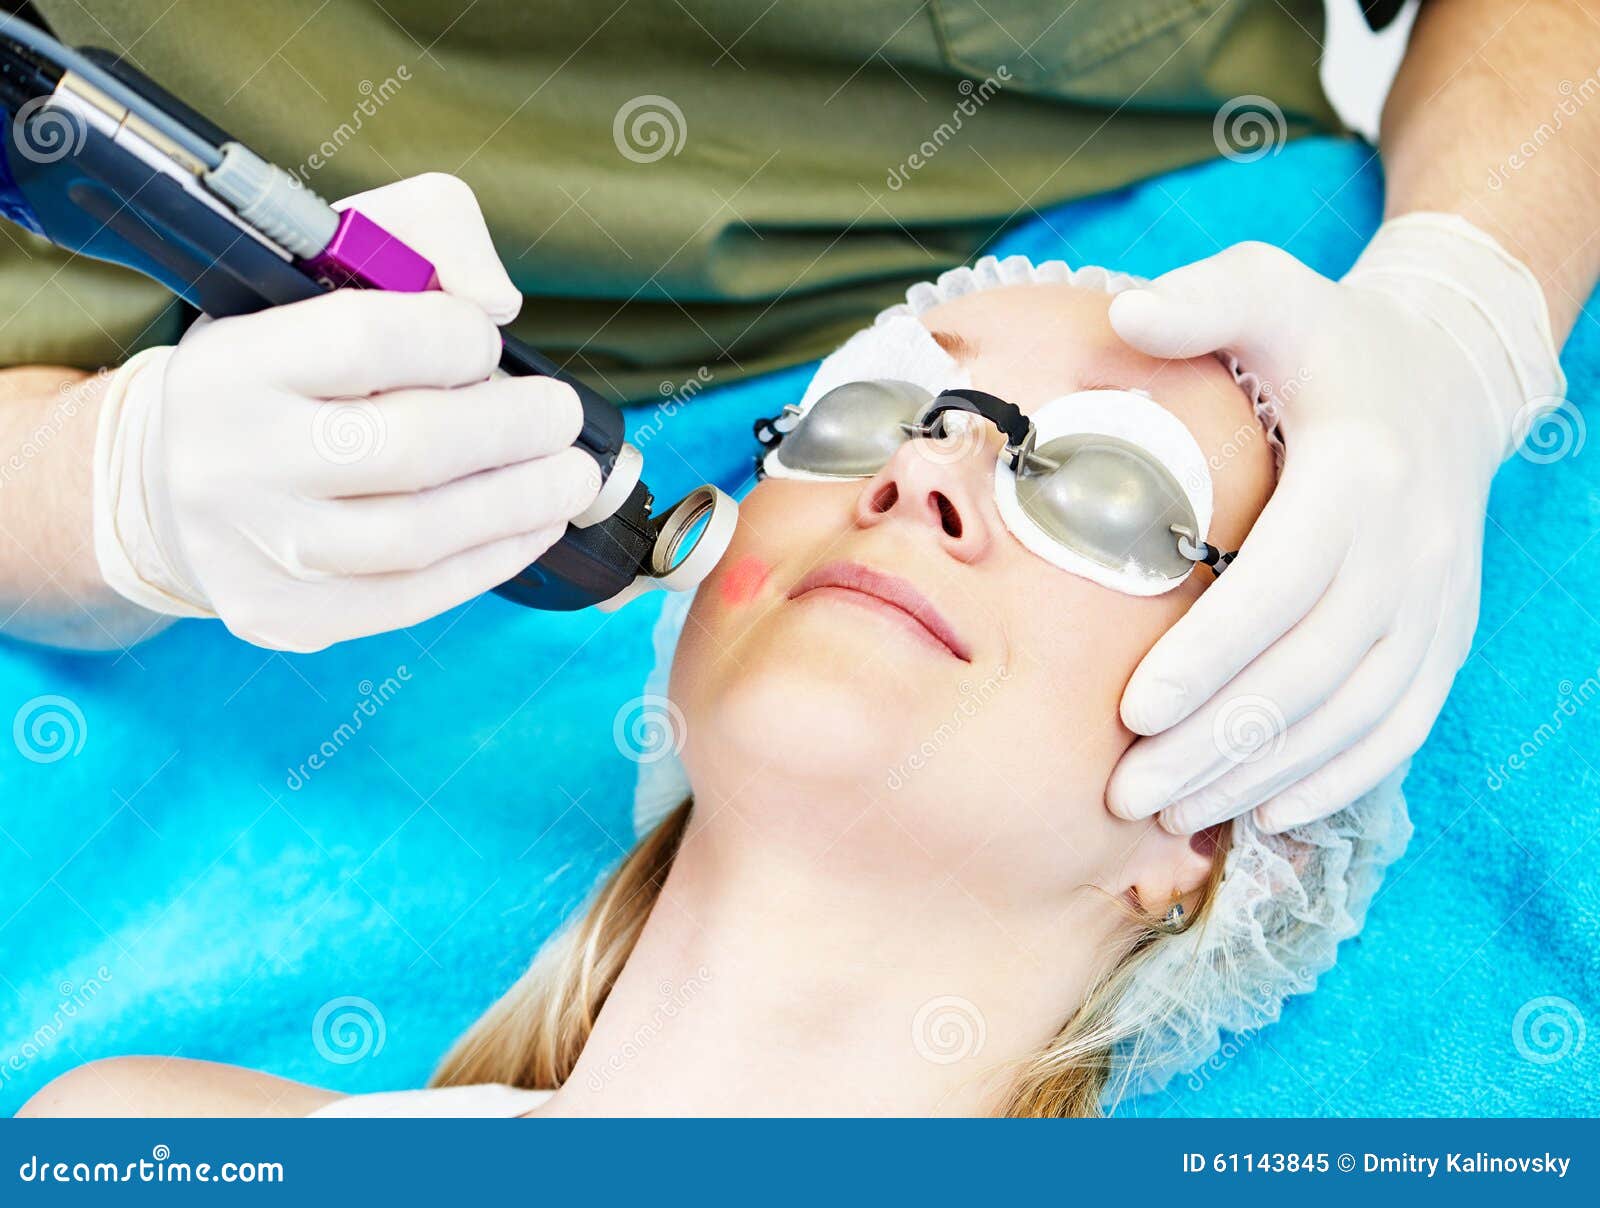 skincare laser cosmetology procedure